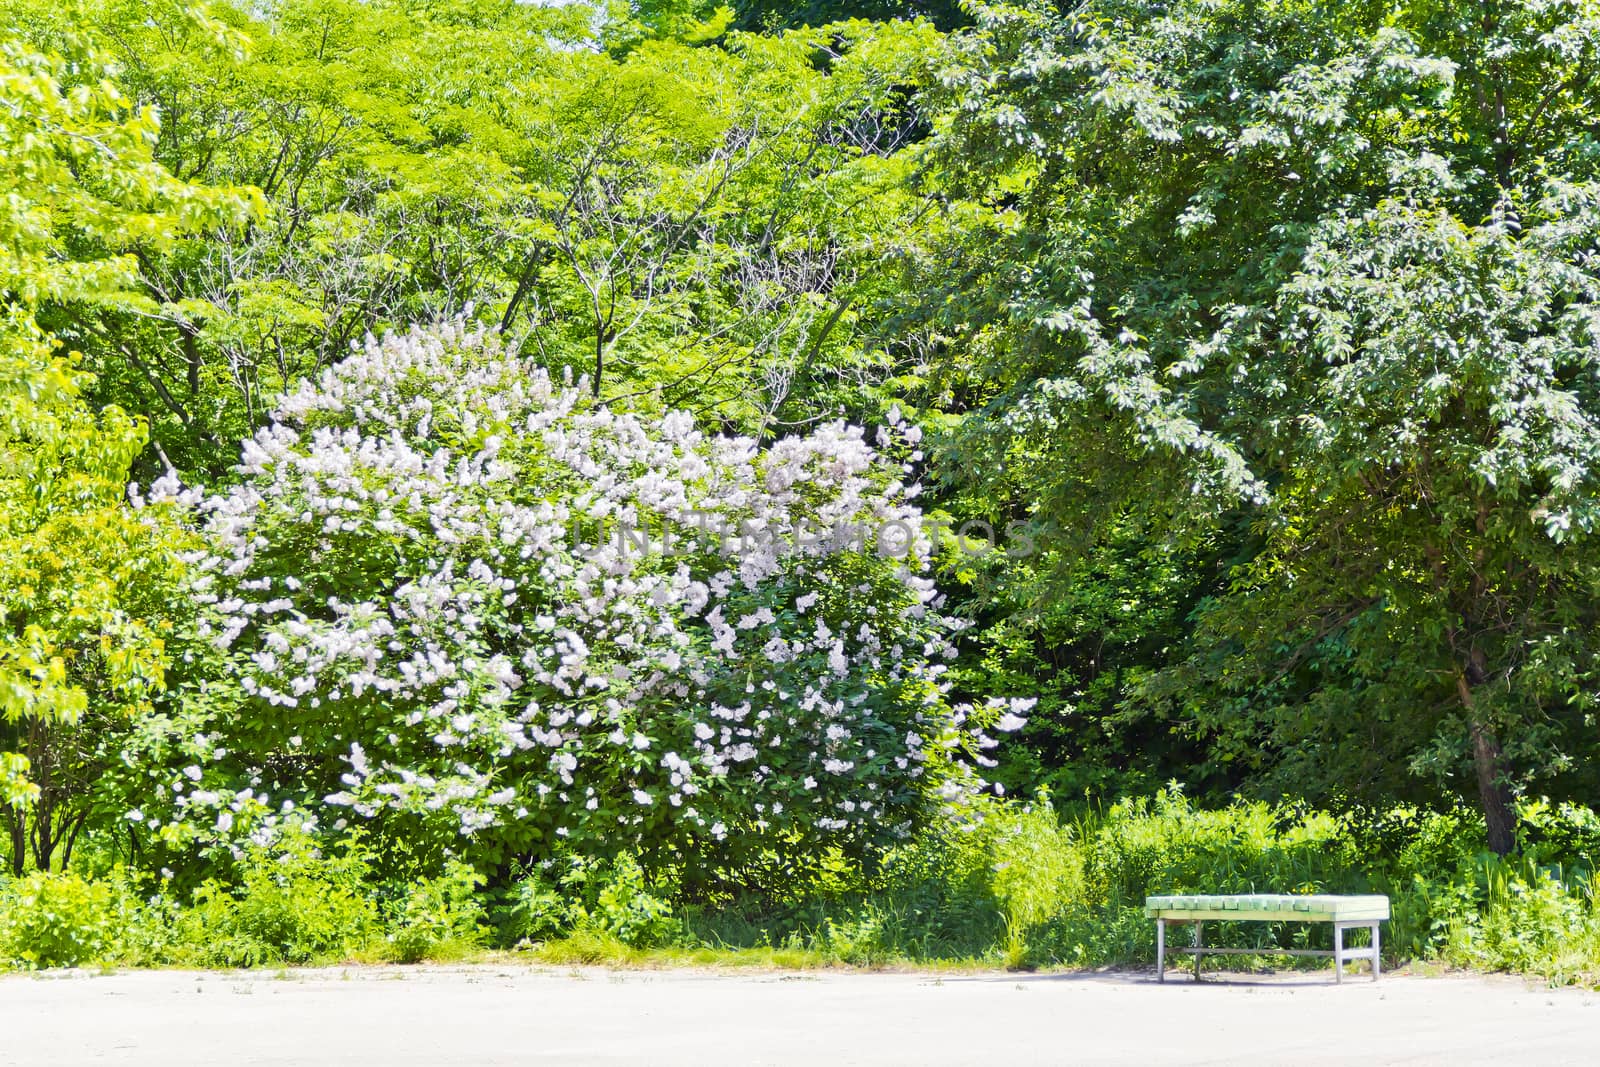 Empty bench near large lilac bush by Julialine